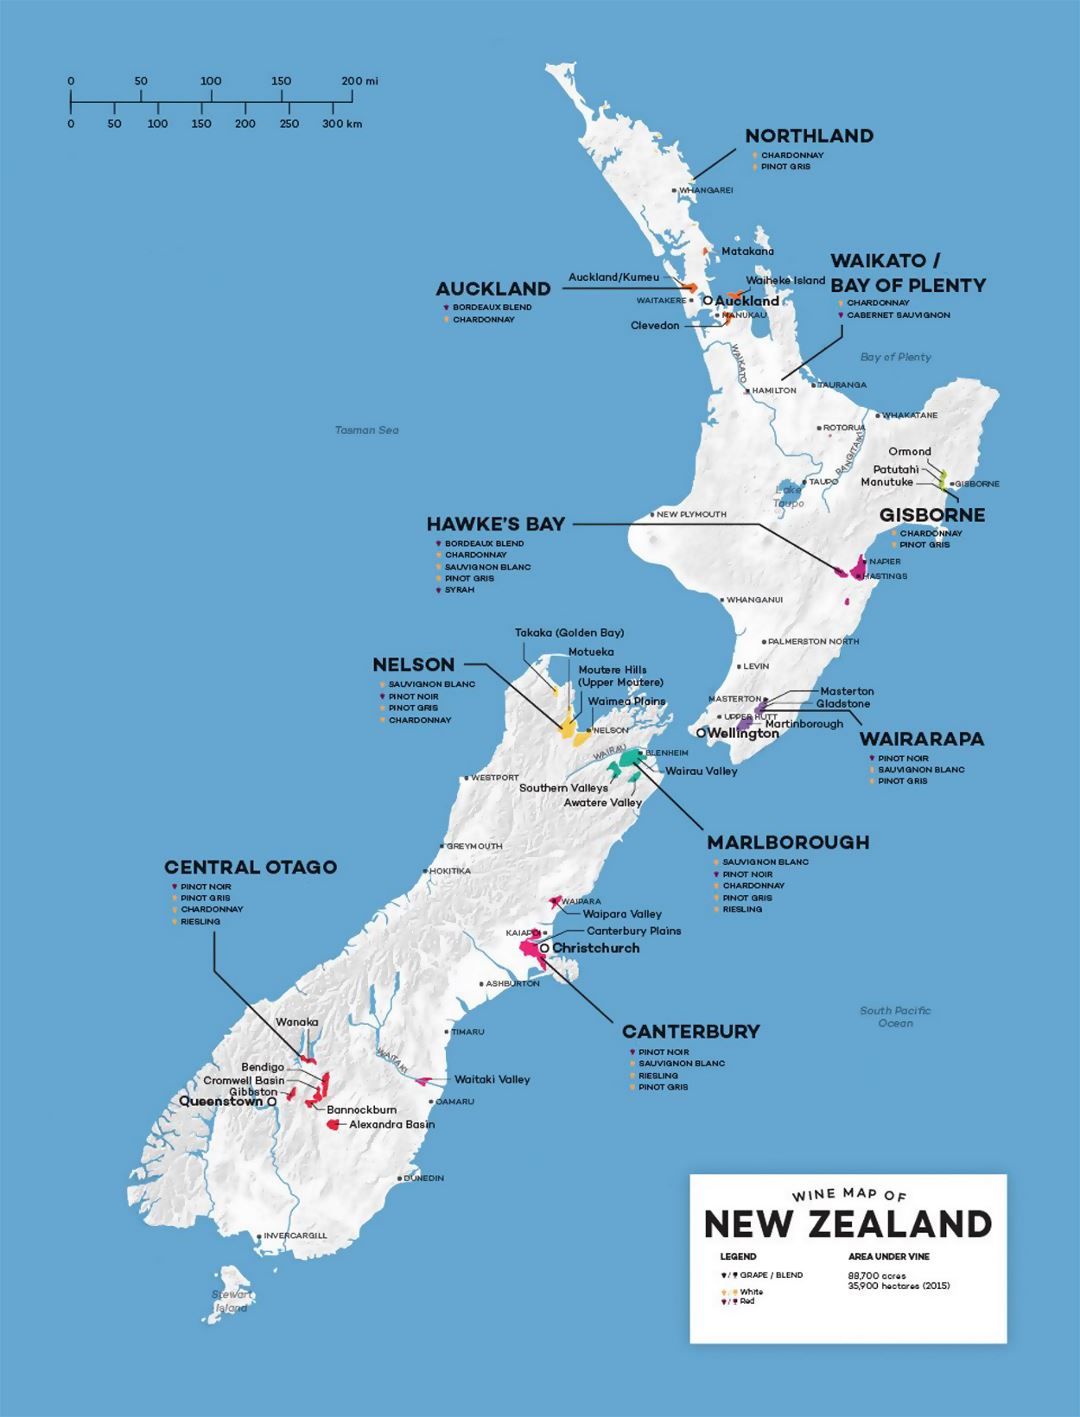 Wine map of New Zealand